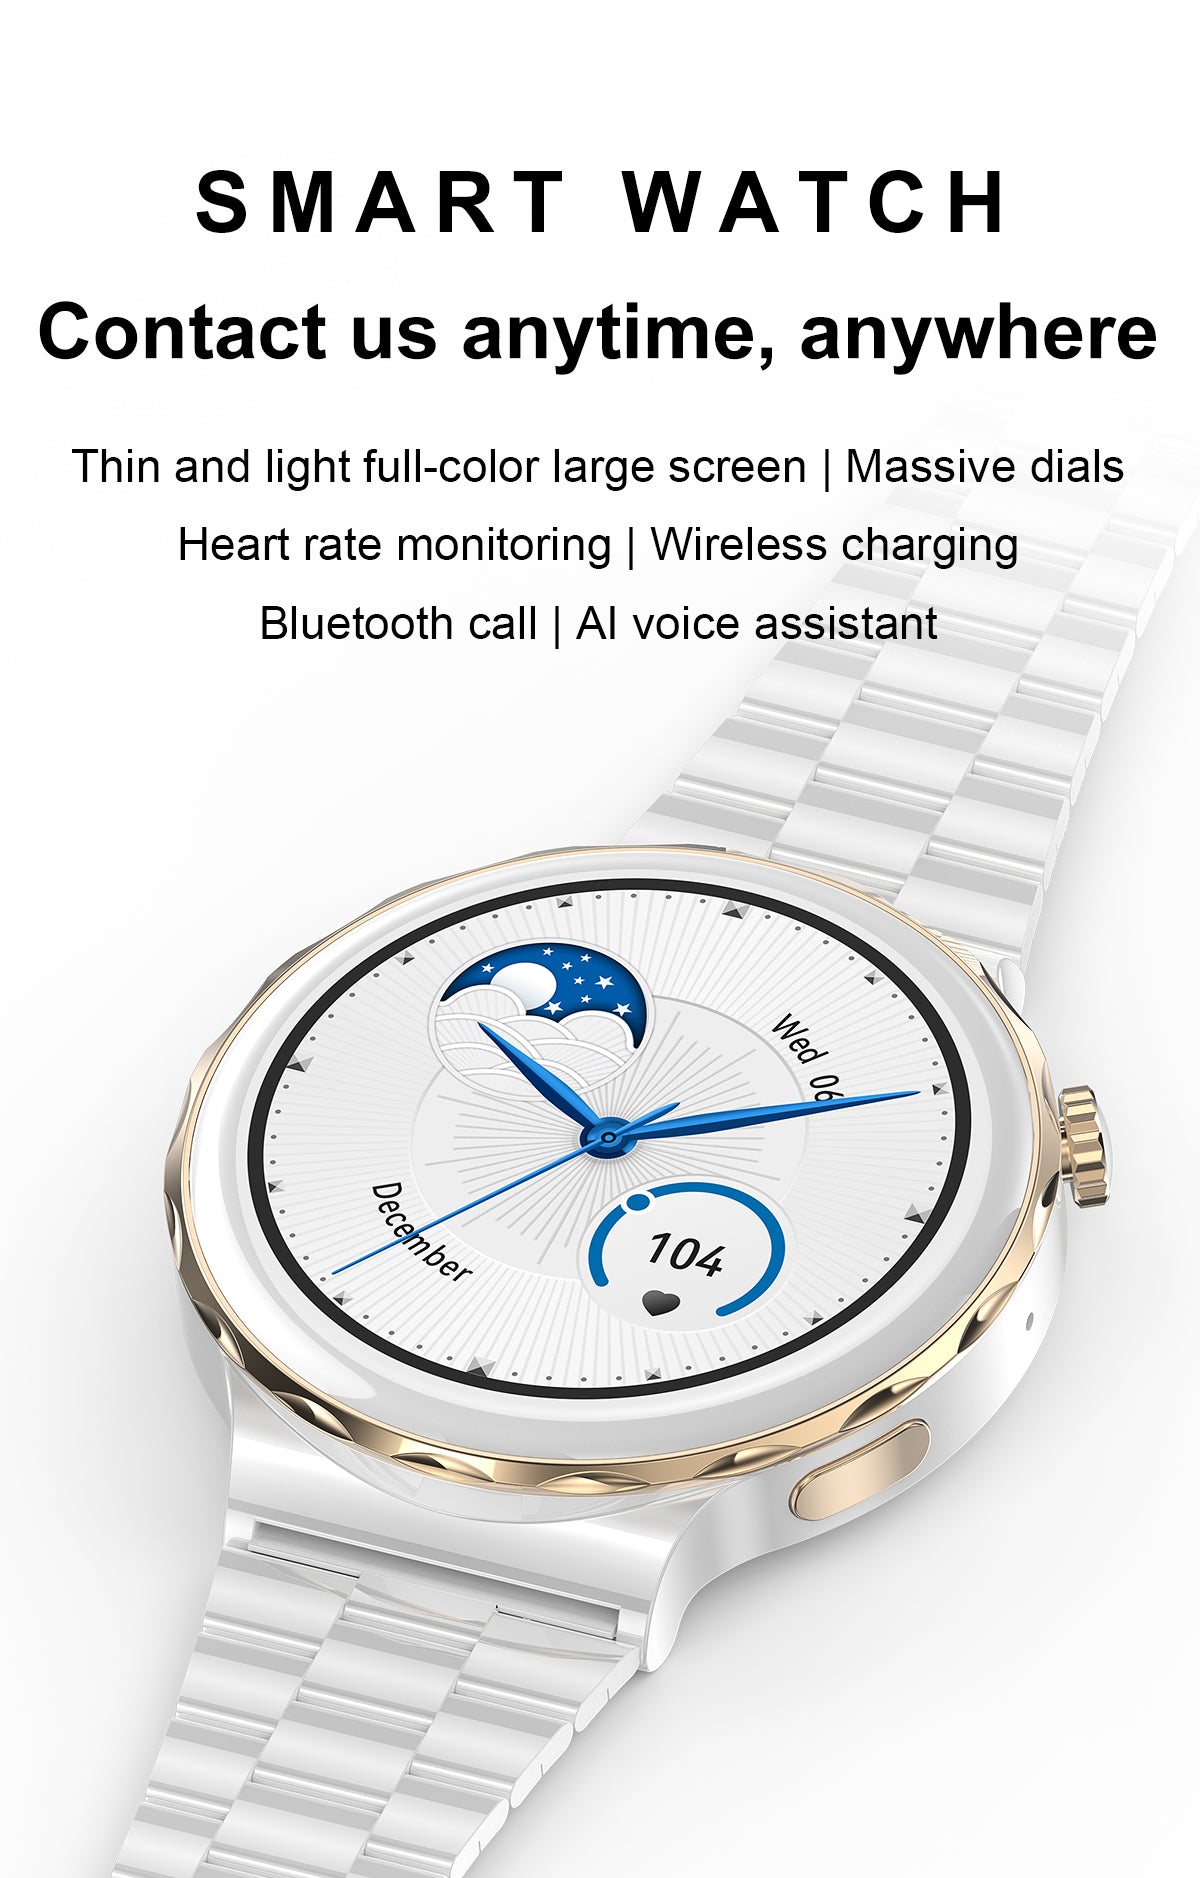 smartwatch pros